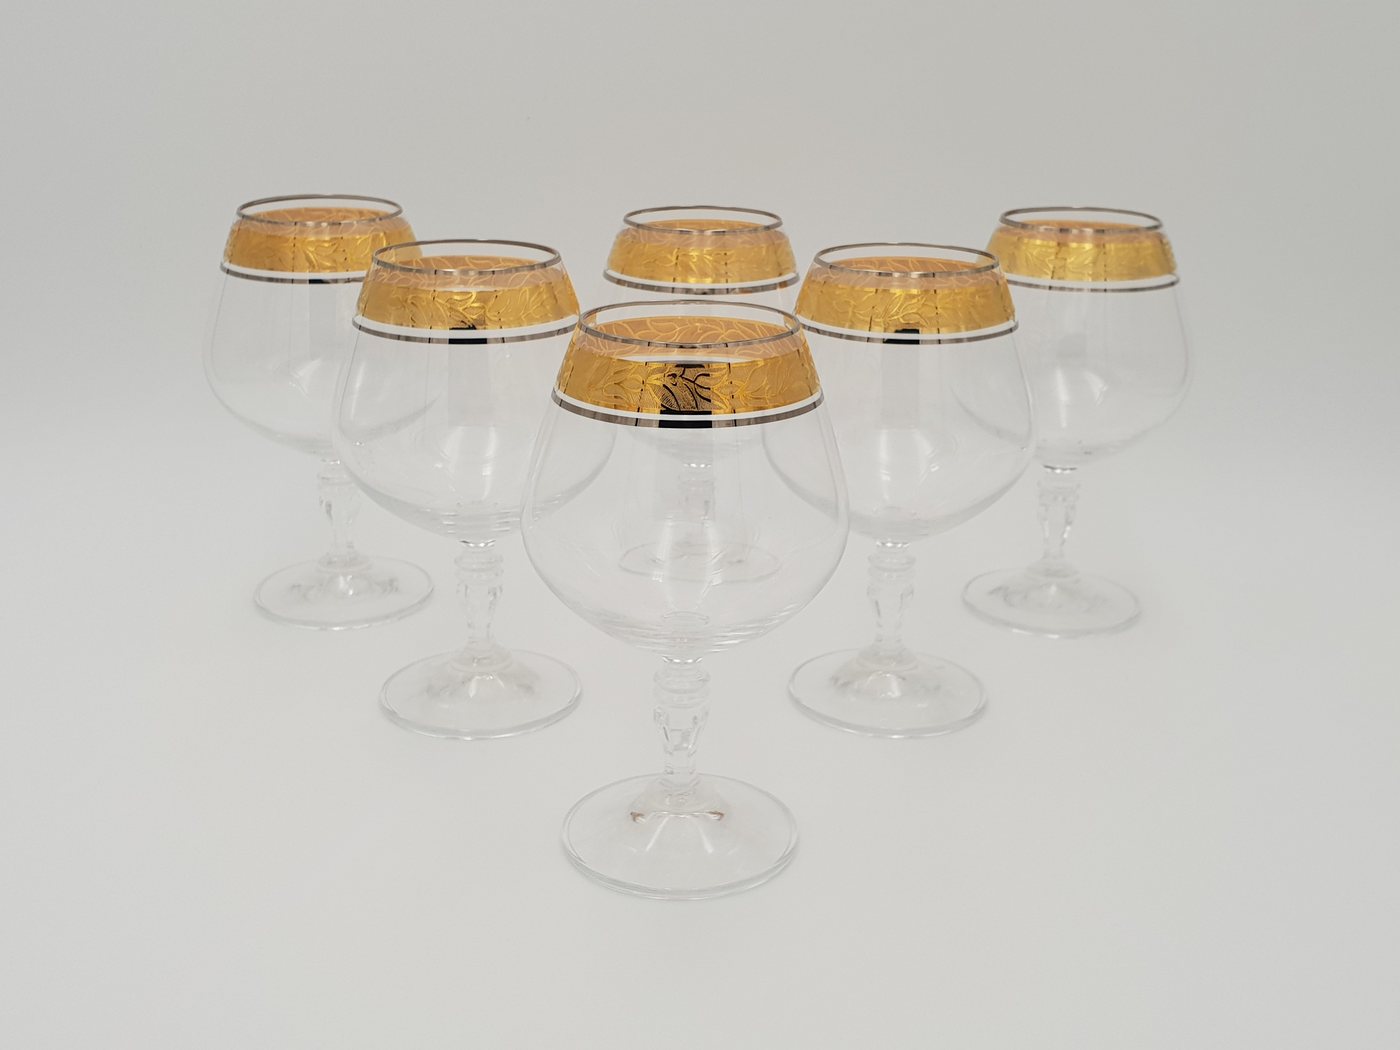 Crystalex Cognacglas Victoria (Gold, Platin) Cognacgläser 380 ml 6er Set, Kristallglas, Kristallglas, Gravur von Crystalex